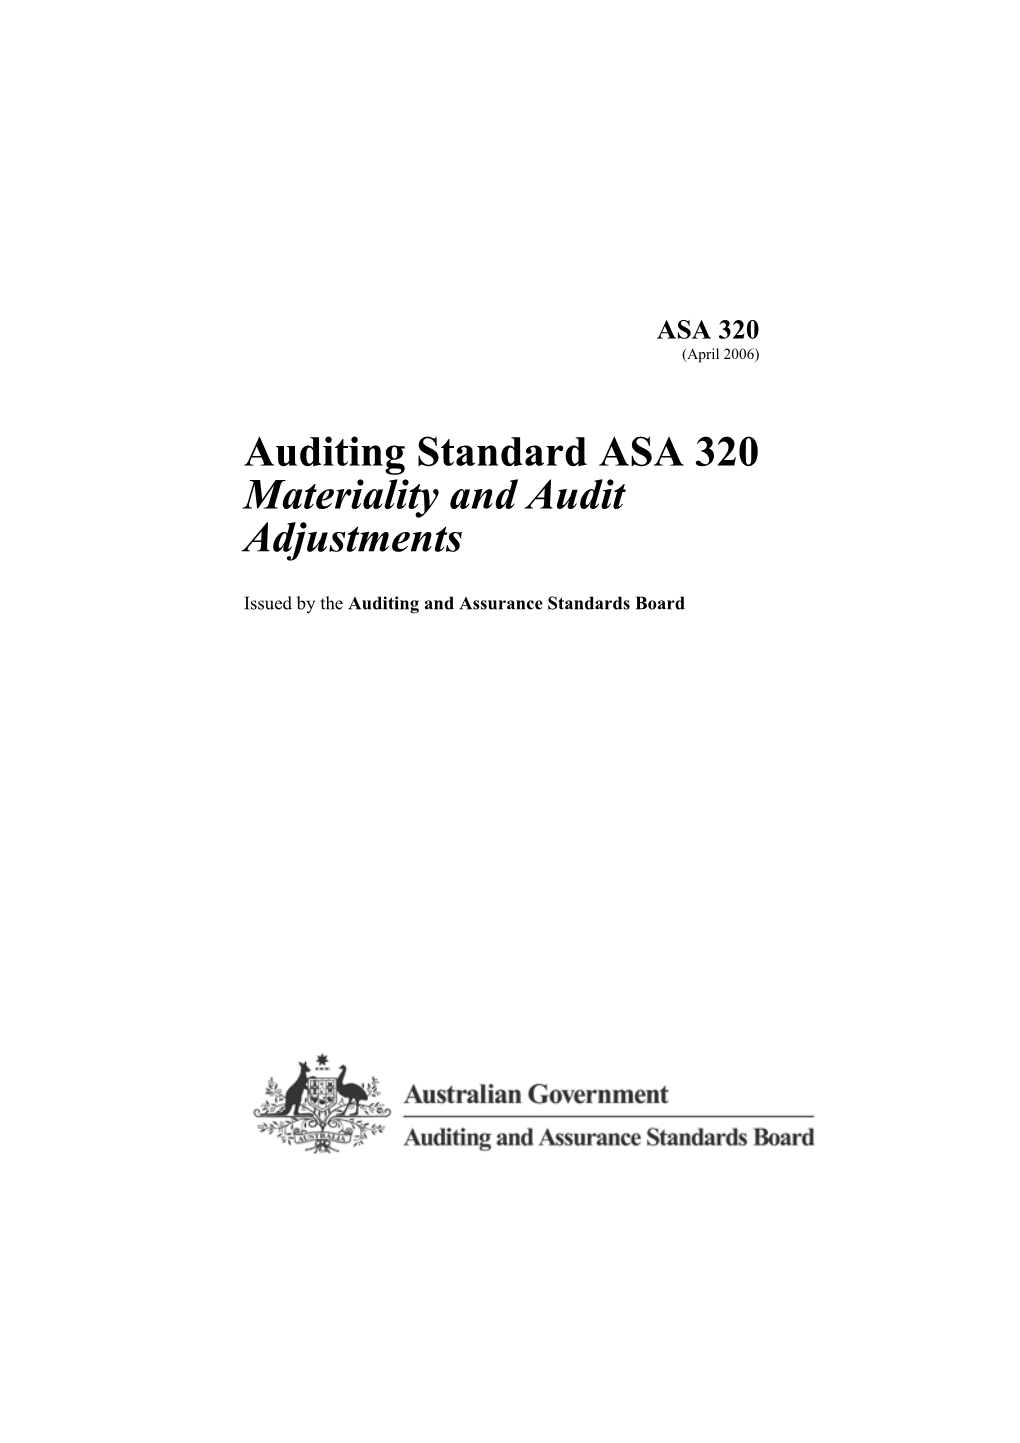 Auditing Standard ASA 320